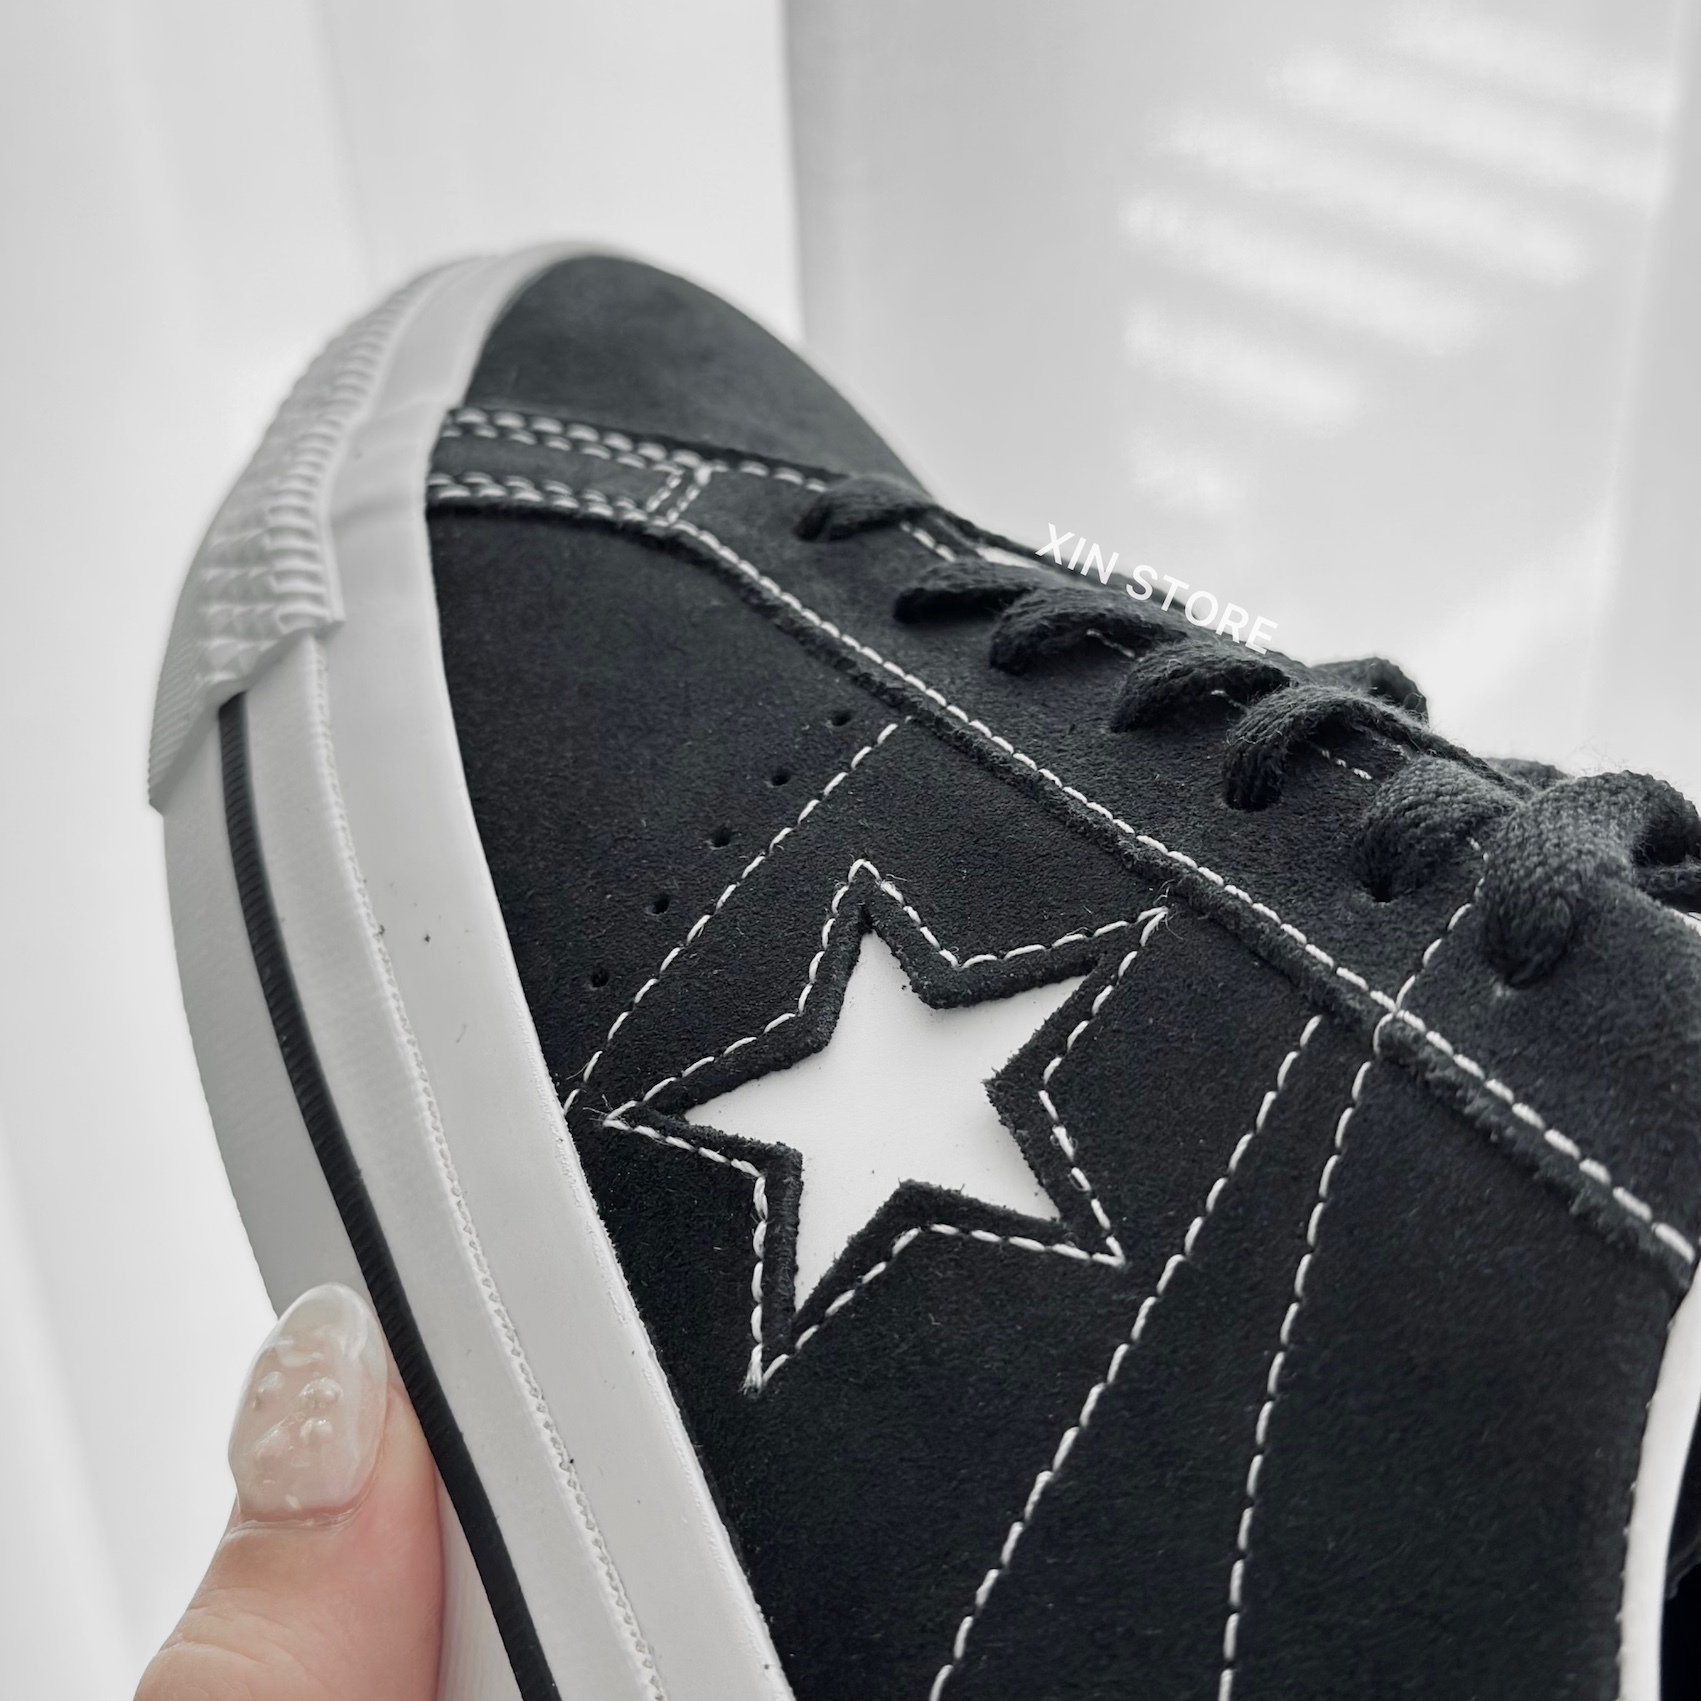 Converse 23 S/S One Star Pro 低筒星星麂皮白標滑板鞋黑白